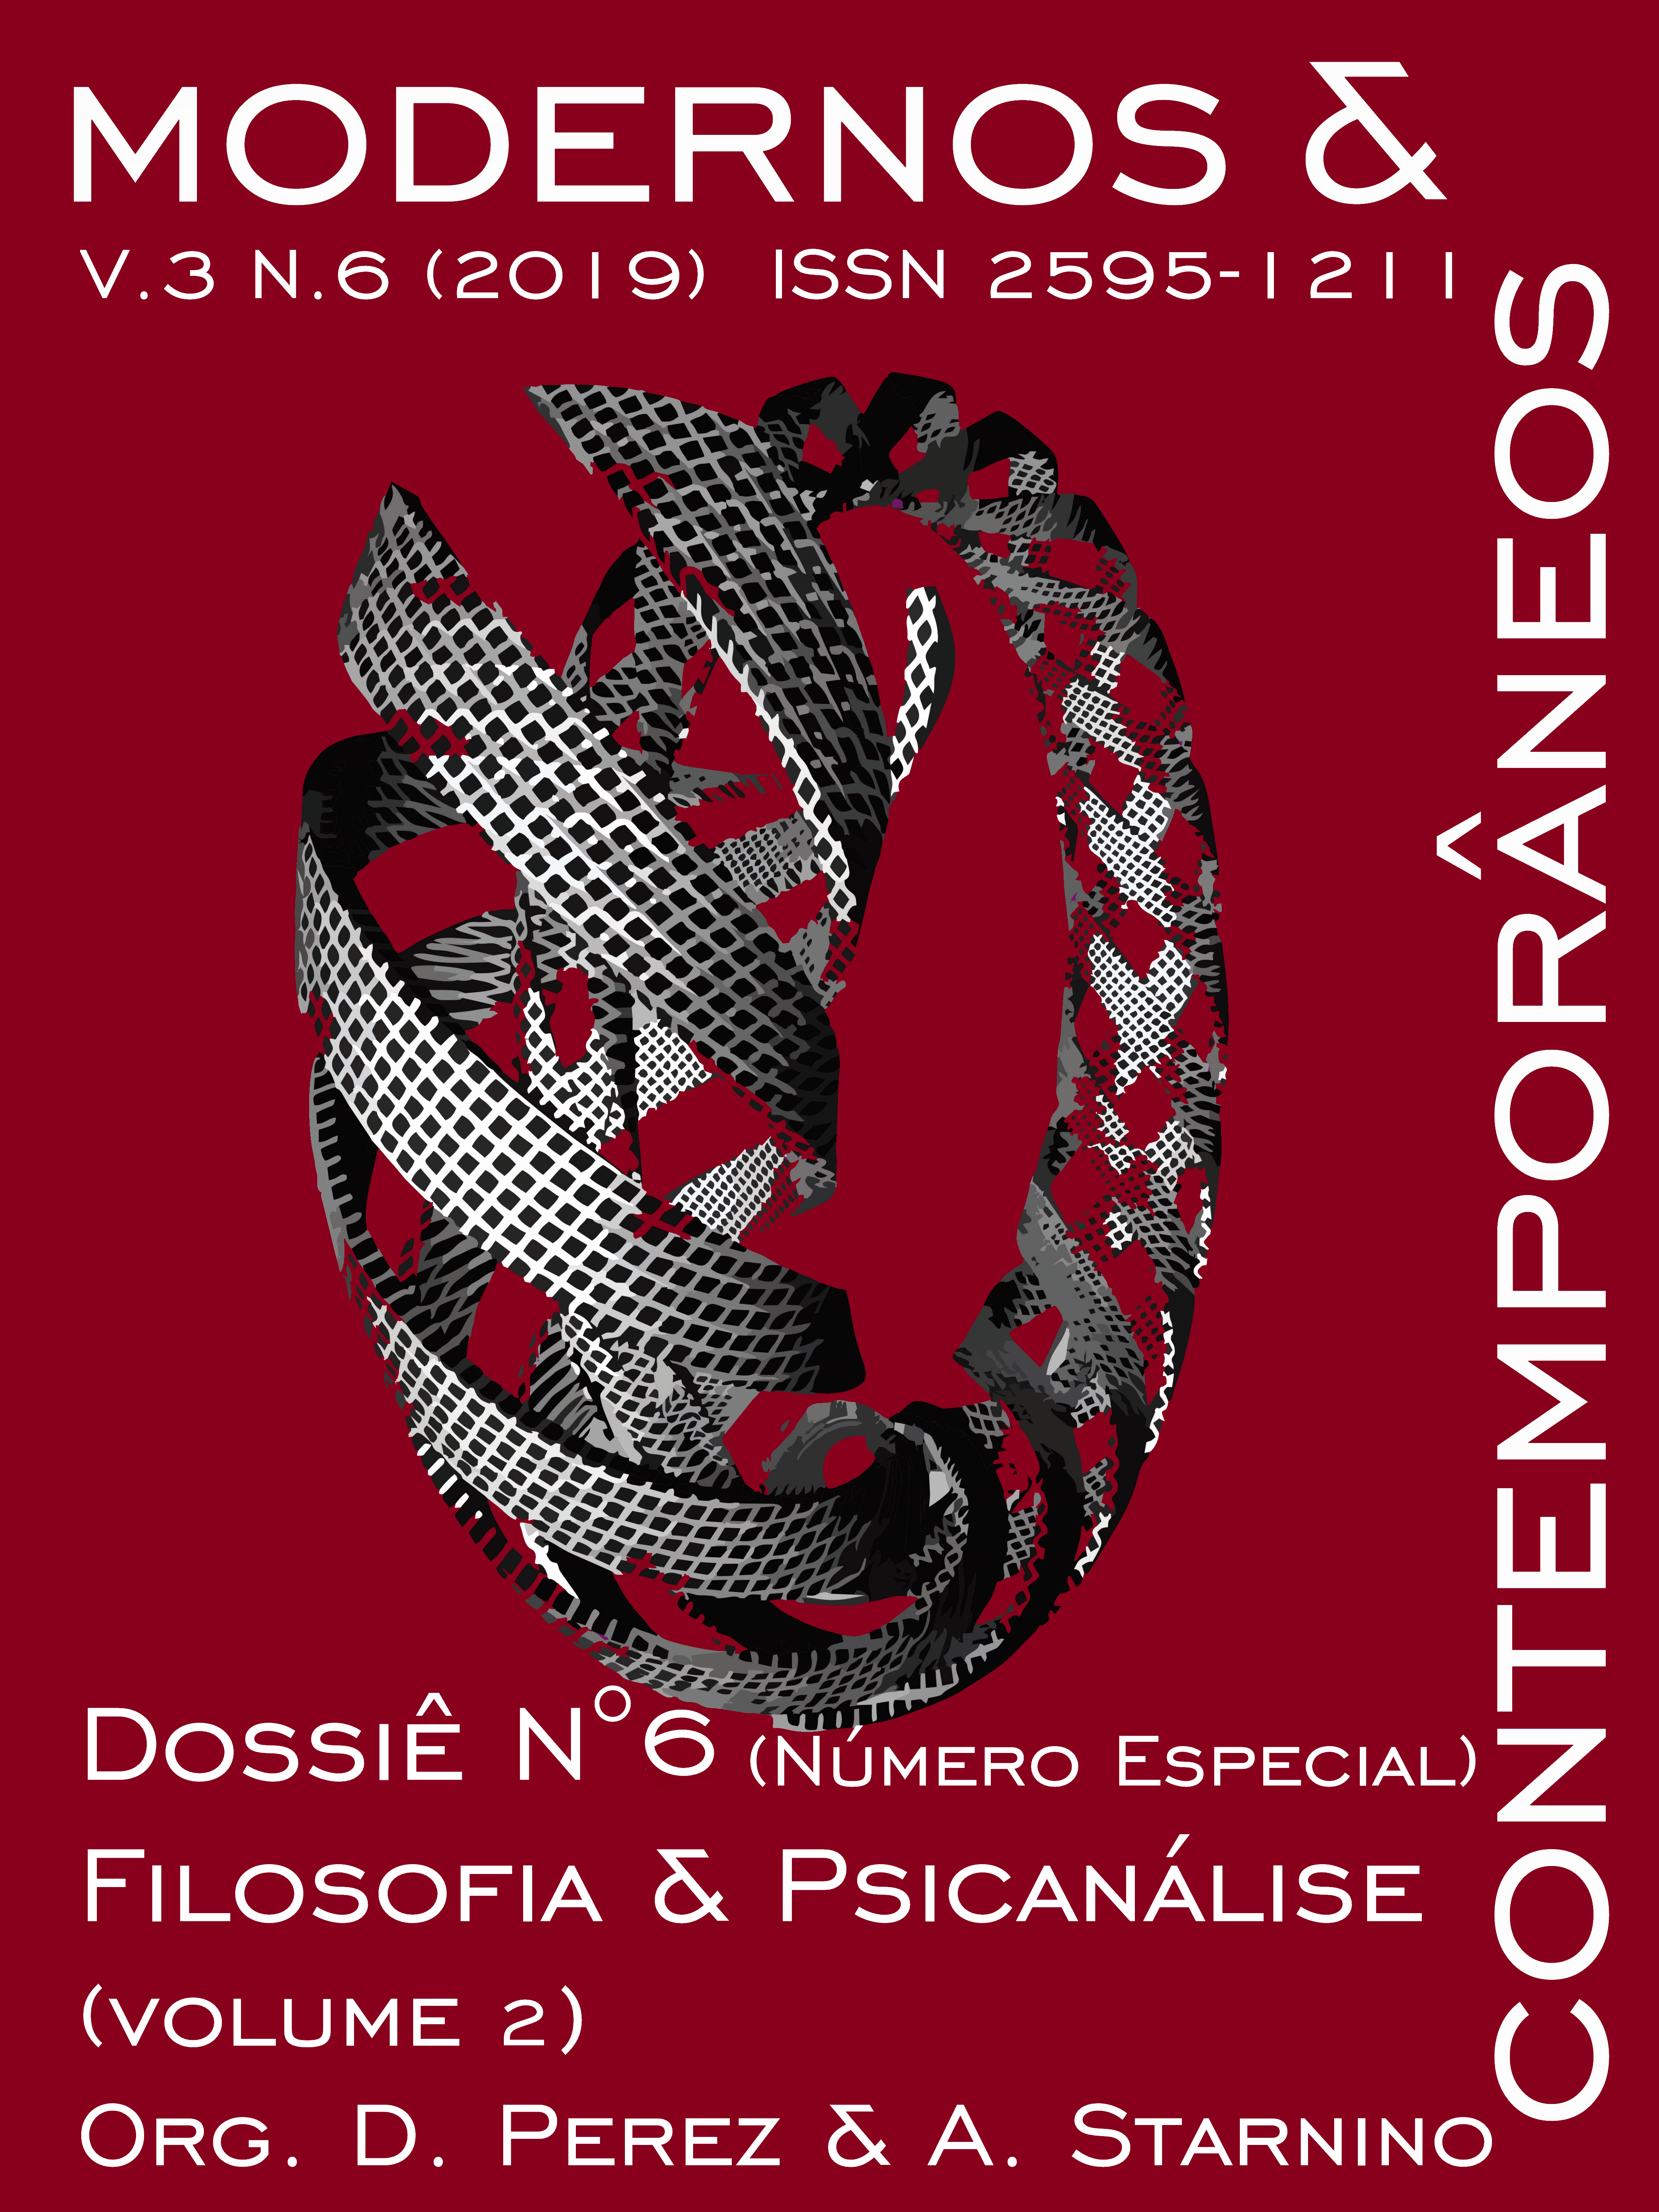 					Visualizar v. 3 n. 6 (2019): Número especial : Filosofia & Psicanálise (Volume 2). Special issue : Philosophy & Psychoanalysis (Volume 2)
				